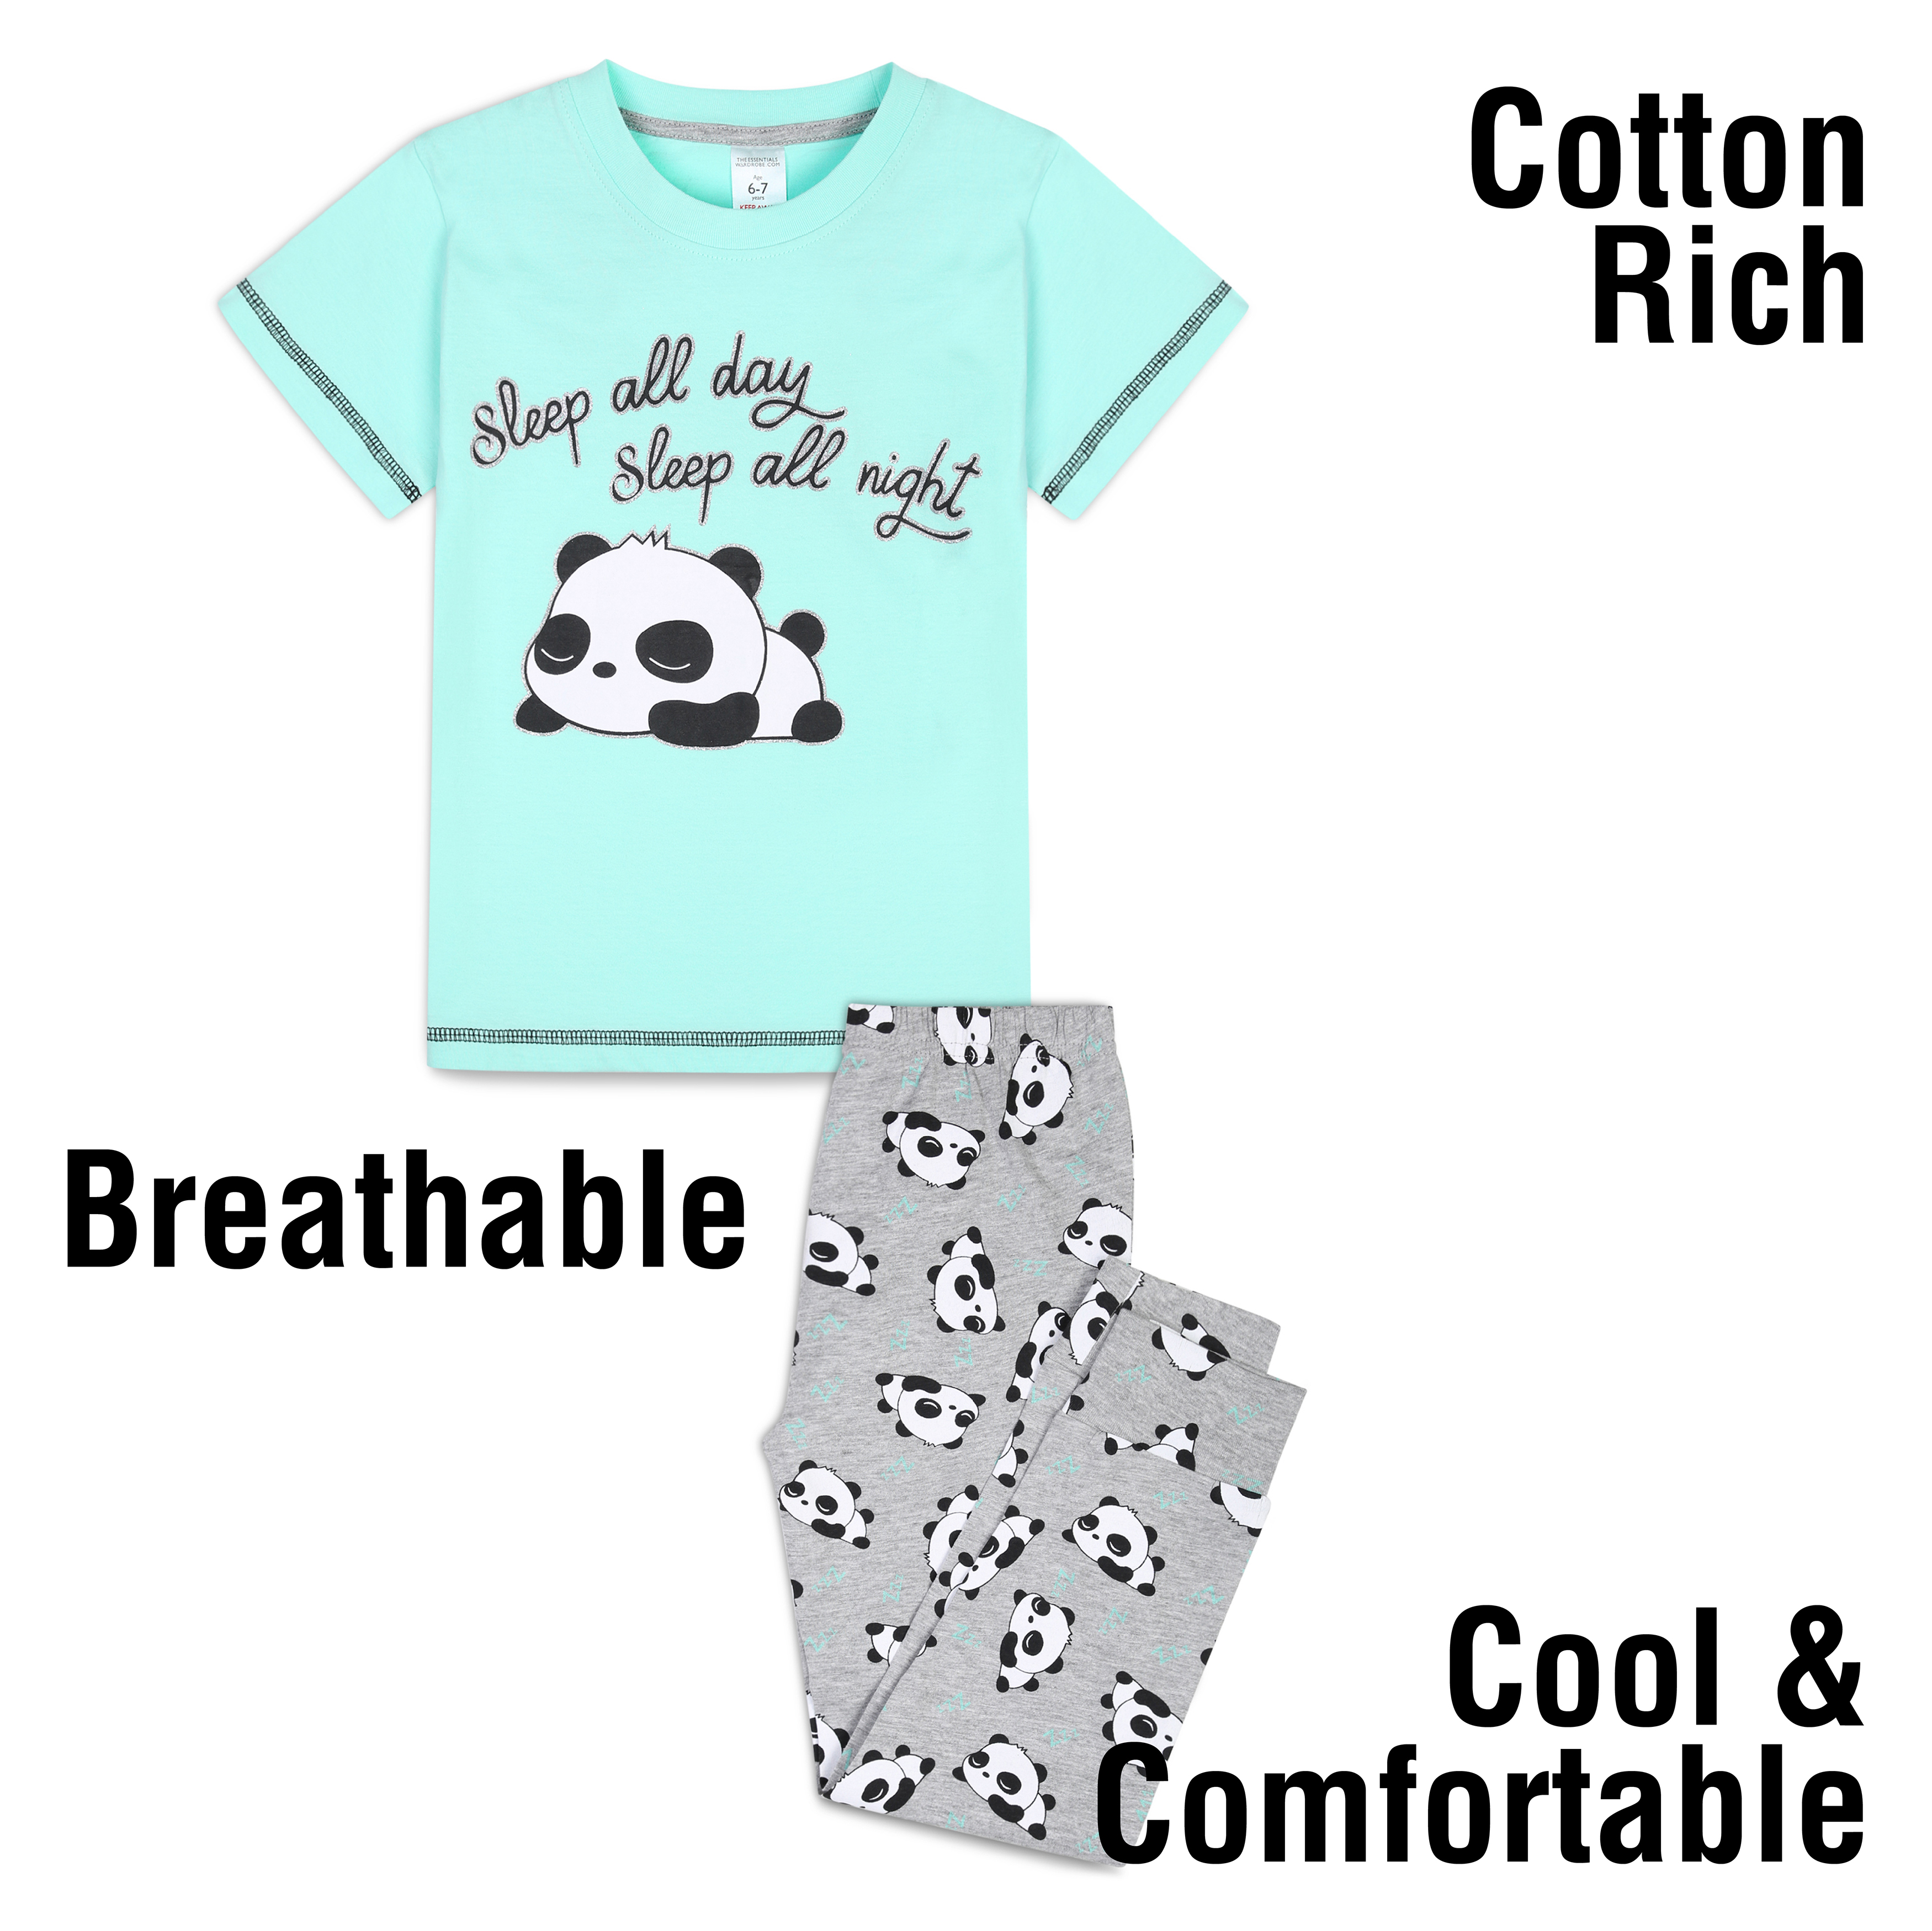 Unicorn Girls Pyjamas 1 Pack Nightwear Unicorn Star Design 100% Cotton Pjs 2 Yrs-13 Yrs 